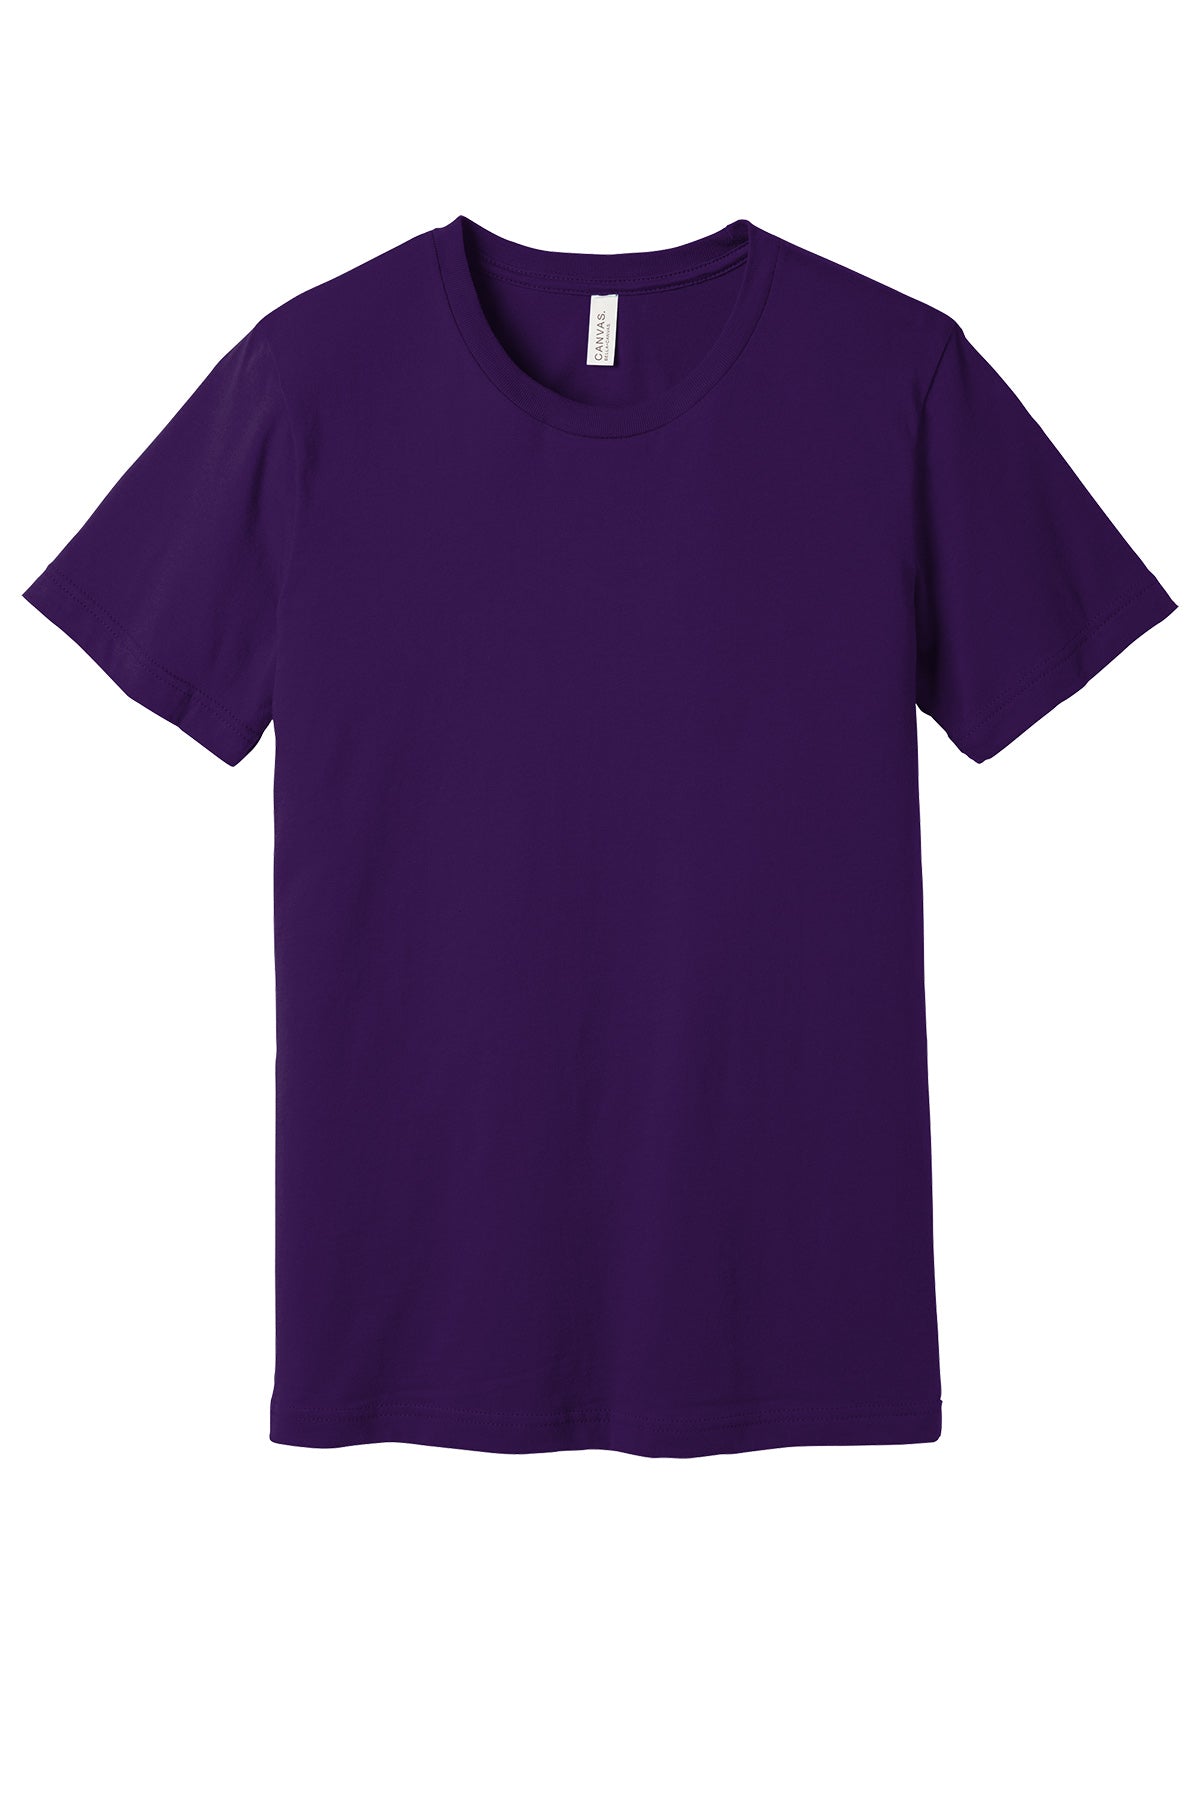 Bella+Canvas Bc3001 Adult T-Shirt Ad Small / Team Purple